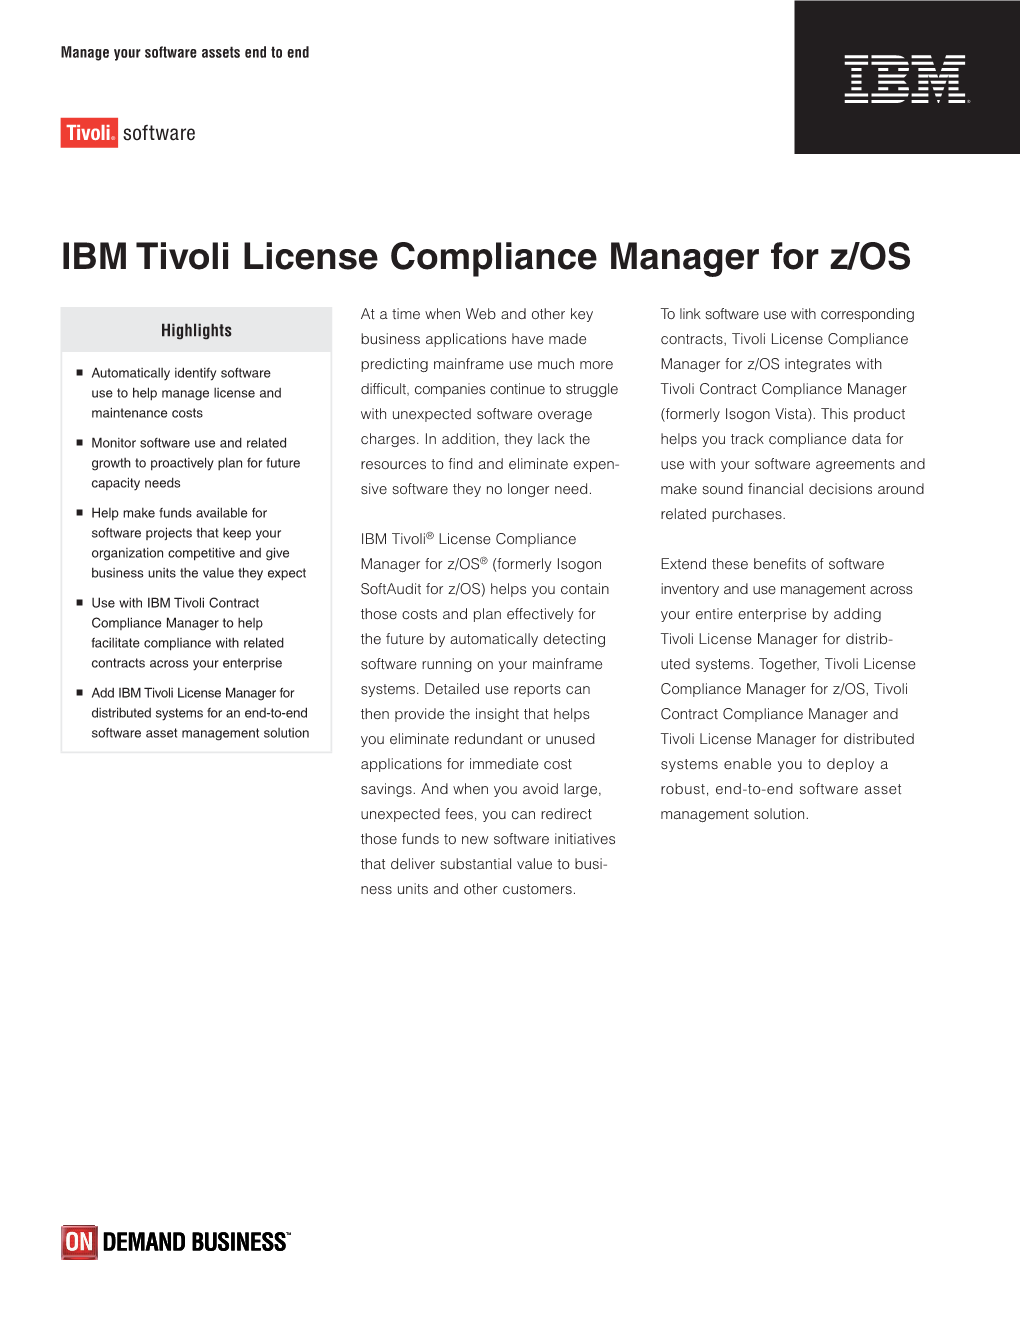 IBM Tivoli License Compliance Manager for Z/OS